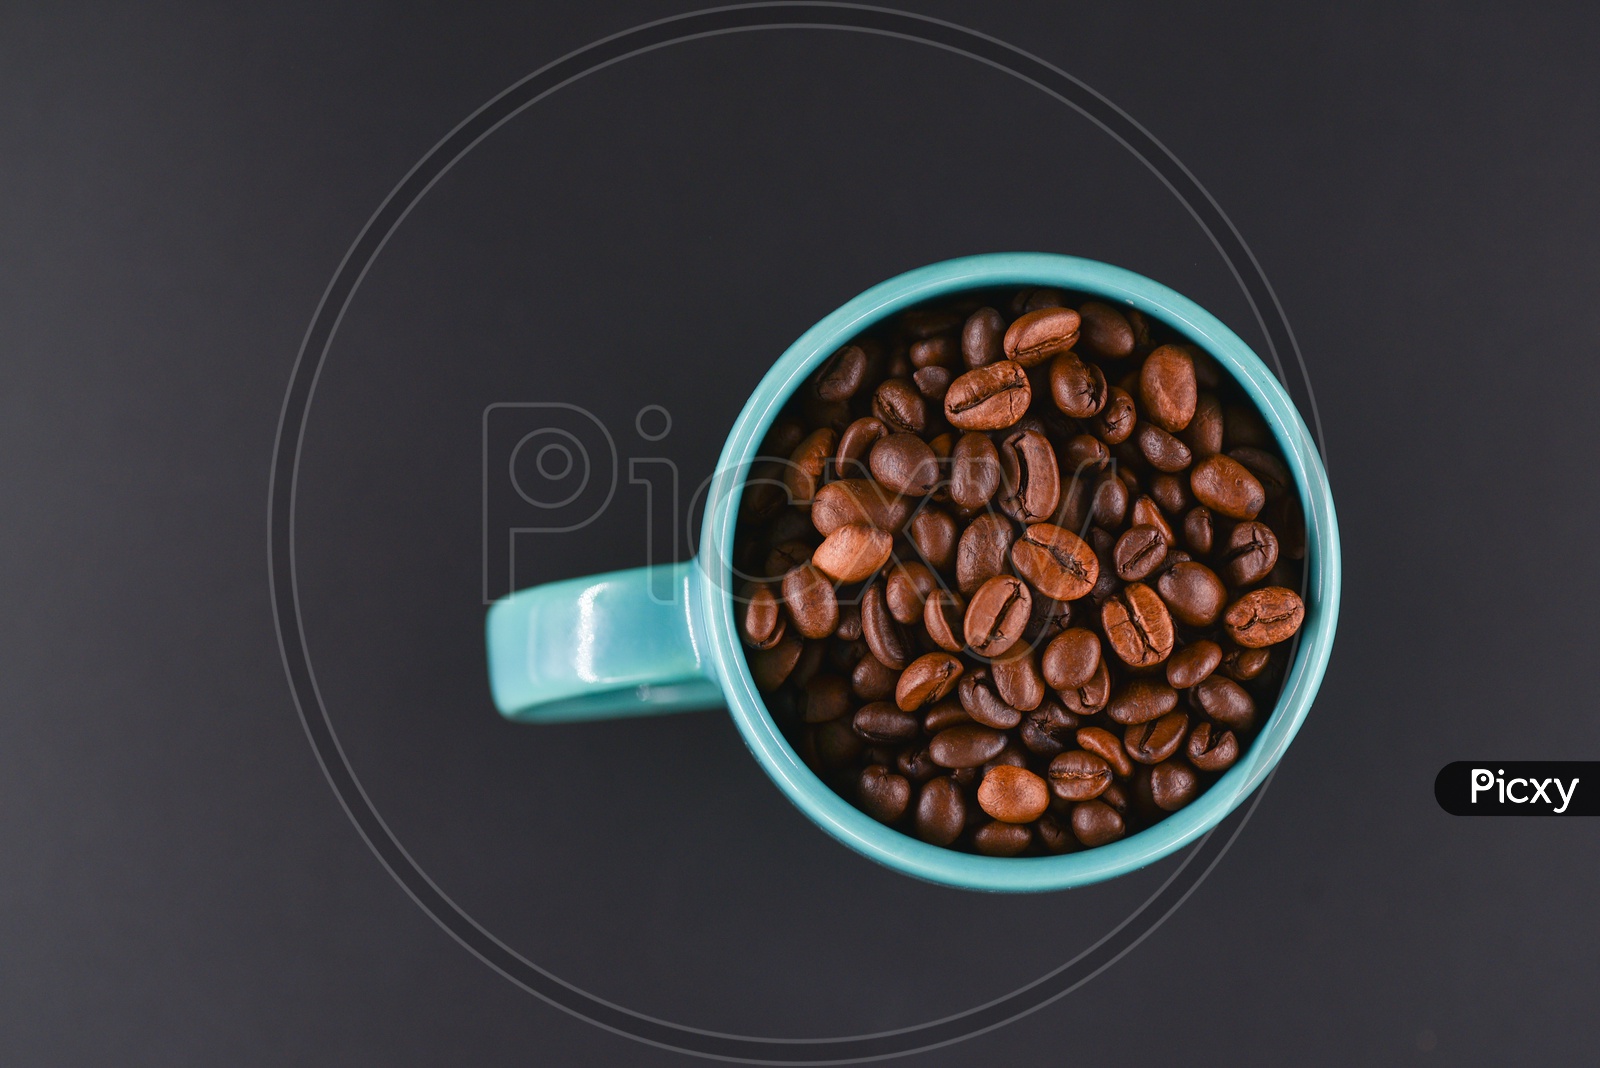 Coffee beans in a blue coffee mug on dark background